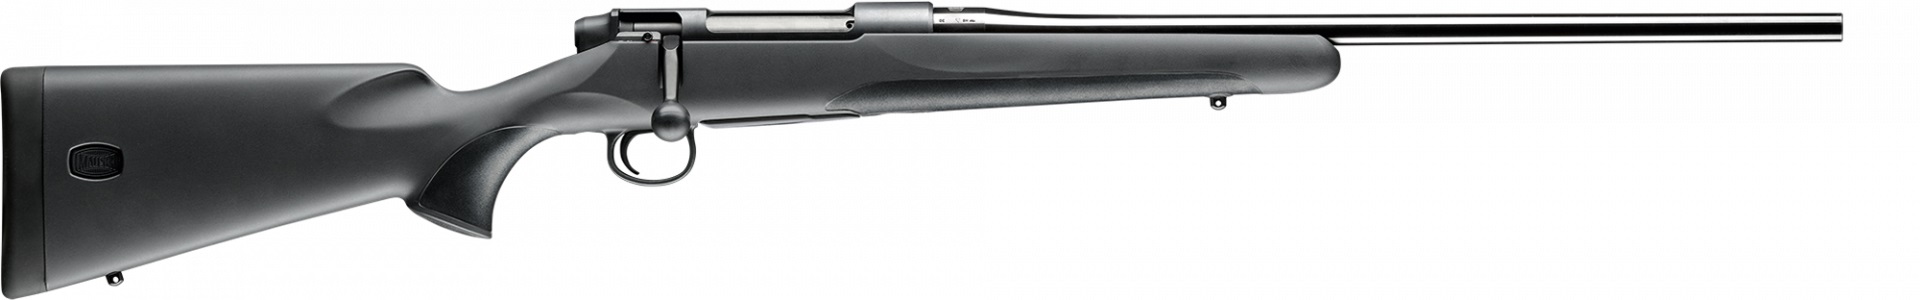 Mauser M18 Image